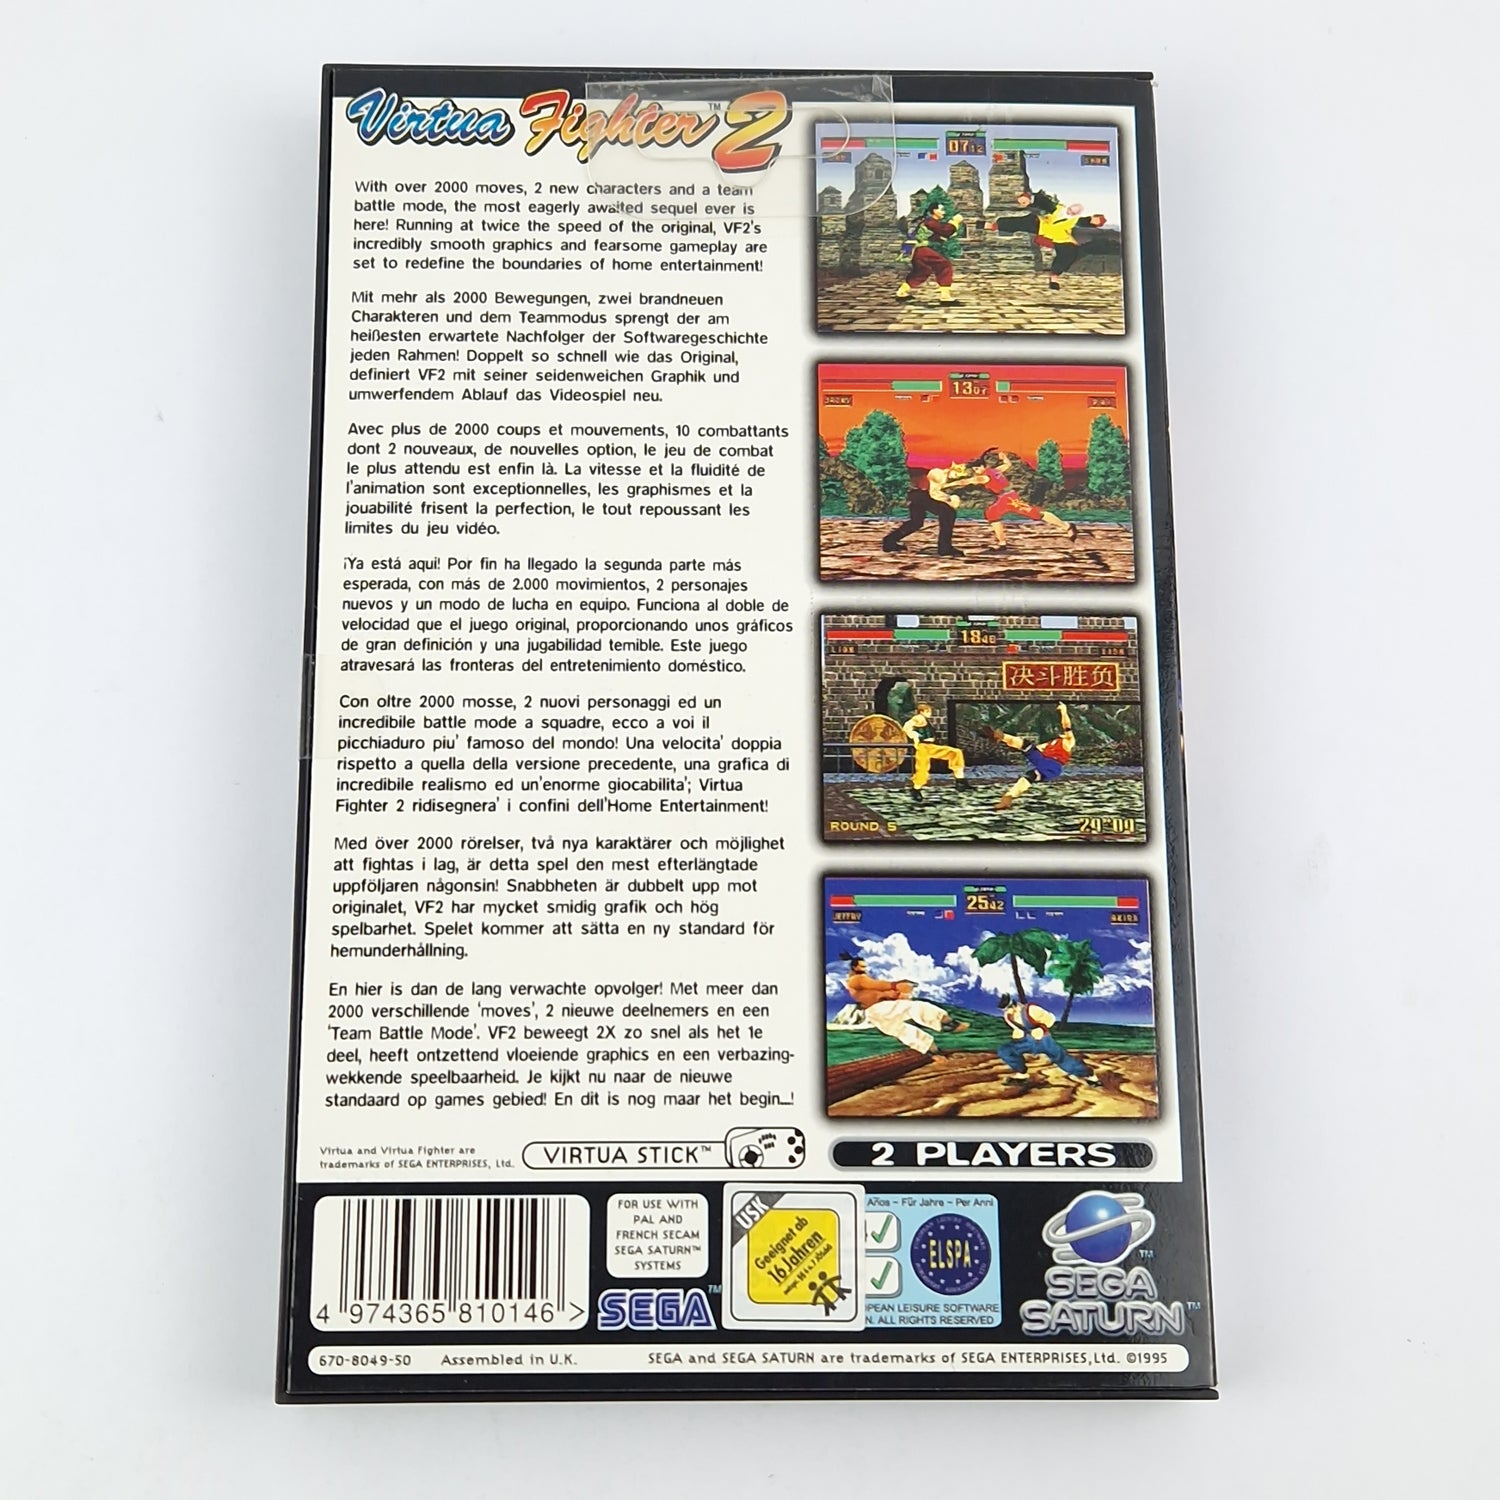 Sega Saturn Game: Virtua Fighter 2 - CD Instructions OVP cib | PAL Disk Game